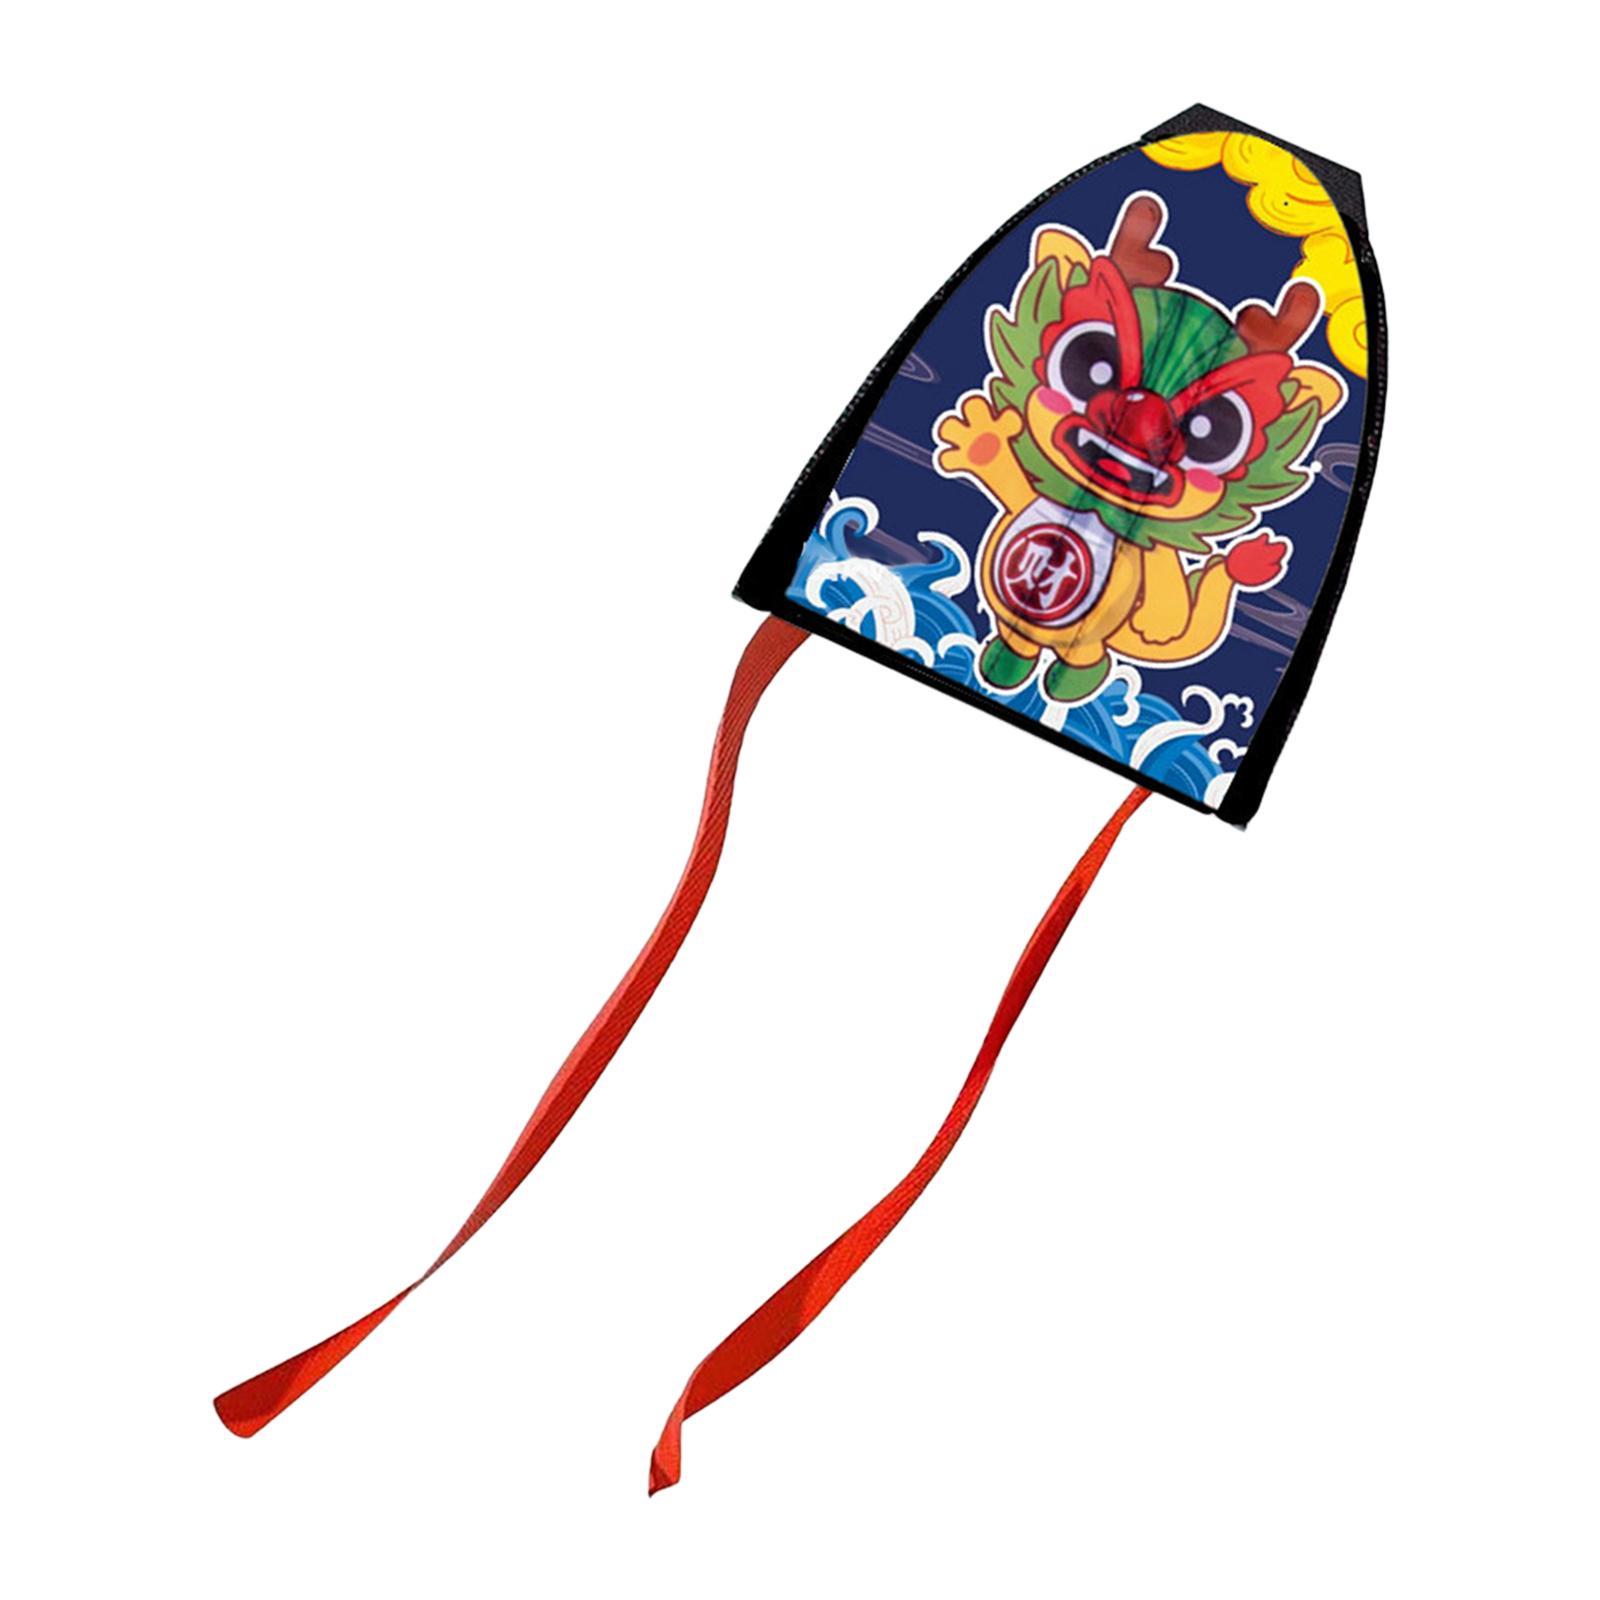 Thumb Ejection Kite Novelty Gift for Kids Teens Kid Toys Mini Kite